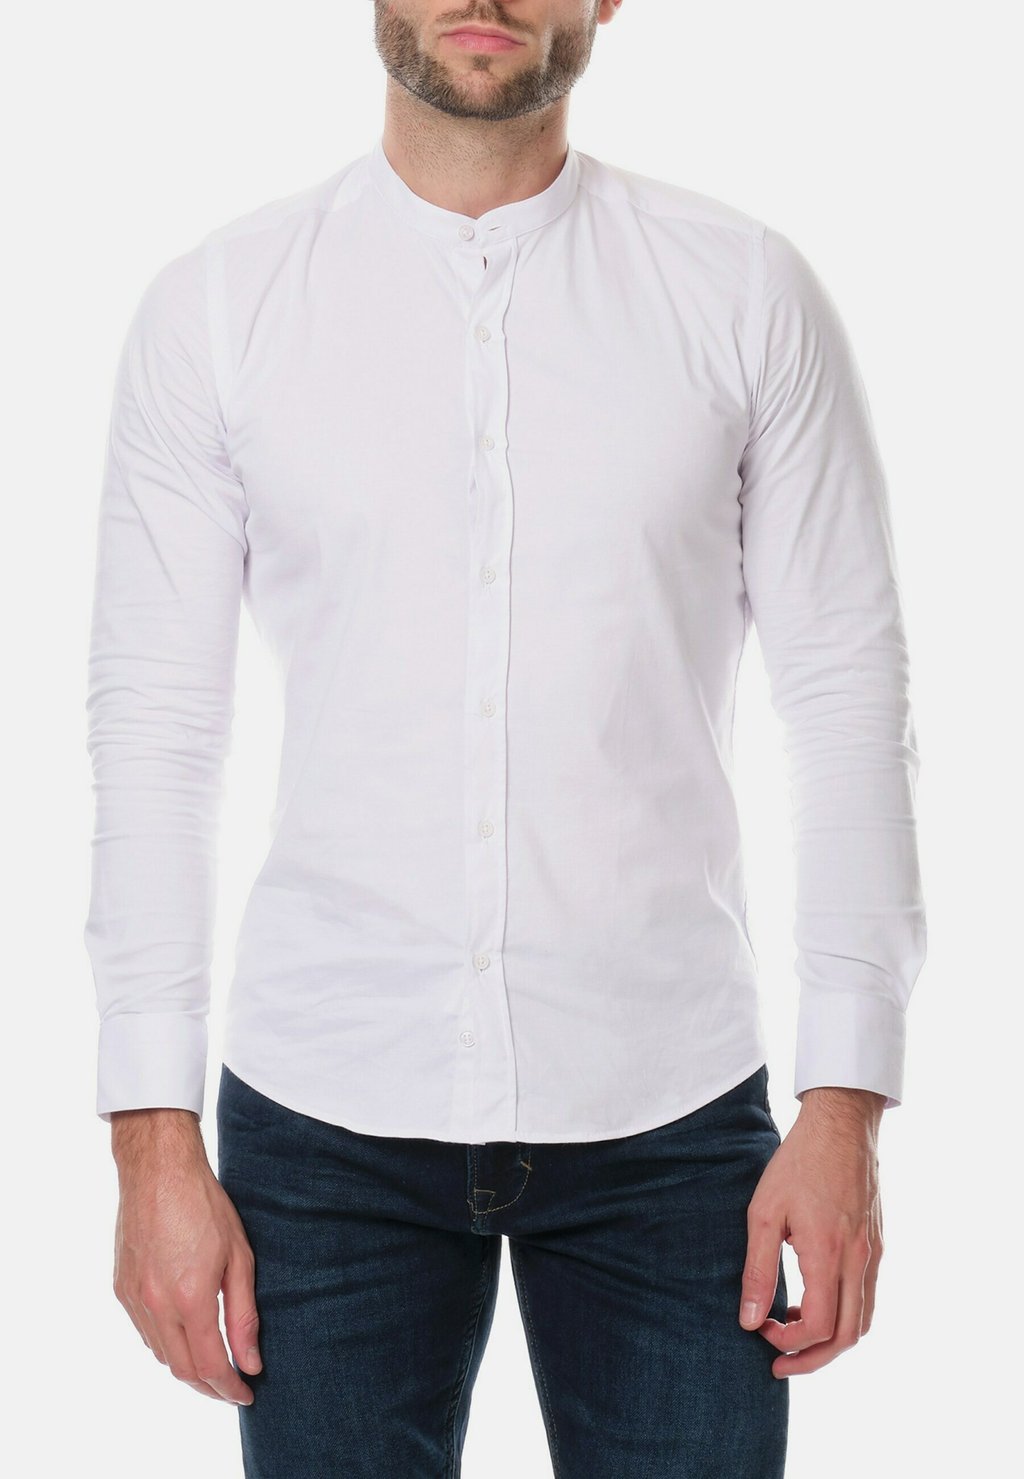 деловая рубашка long sleeved cvc ac Рубашка LONG-SLEEVED Hopenlife, белый